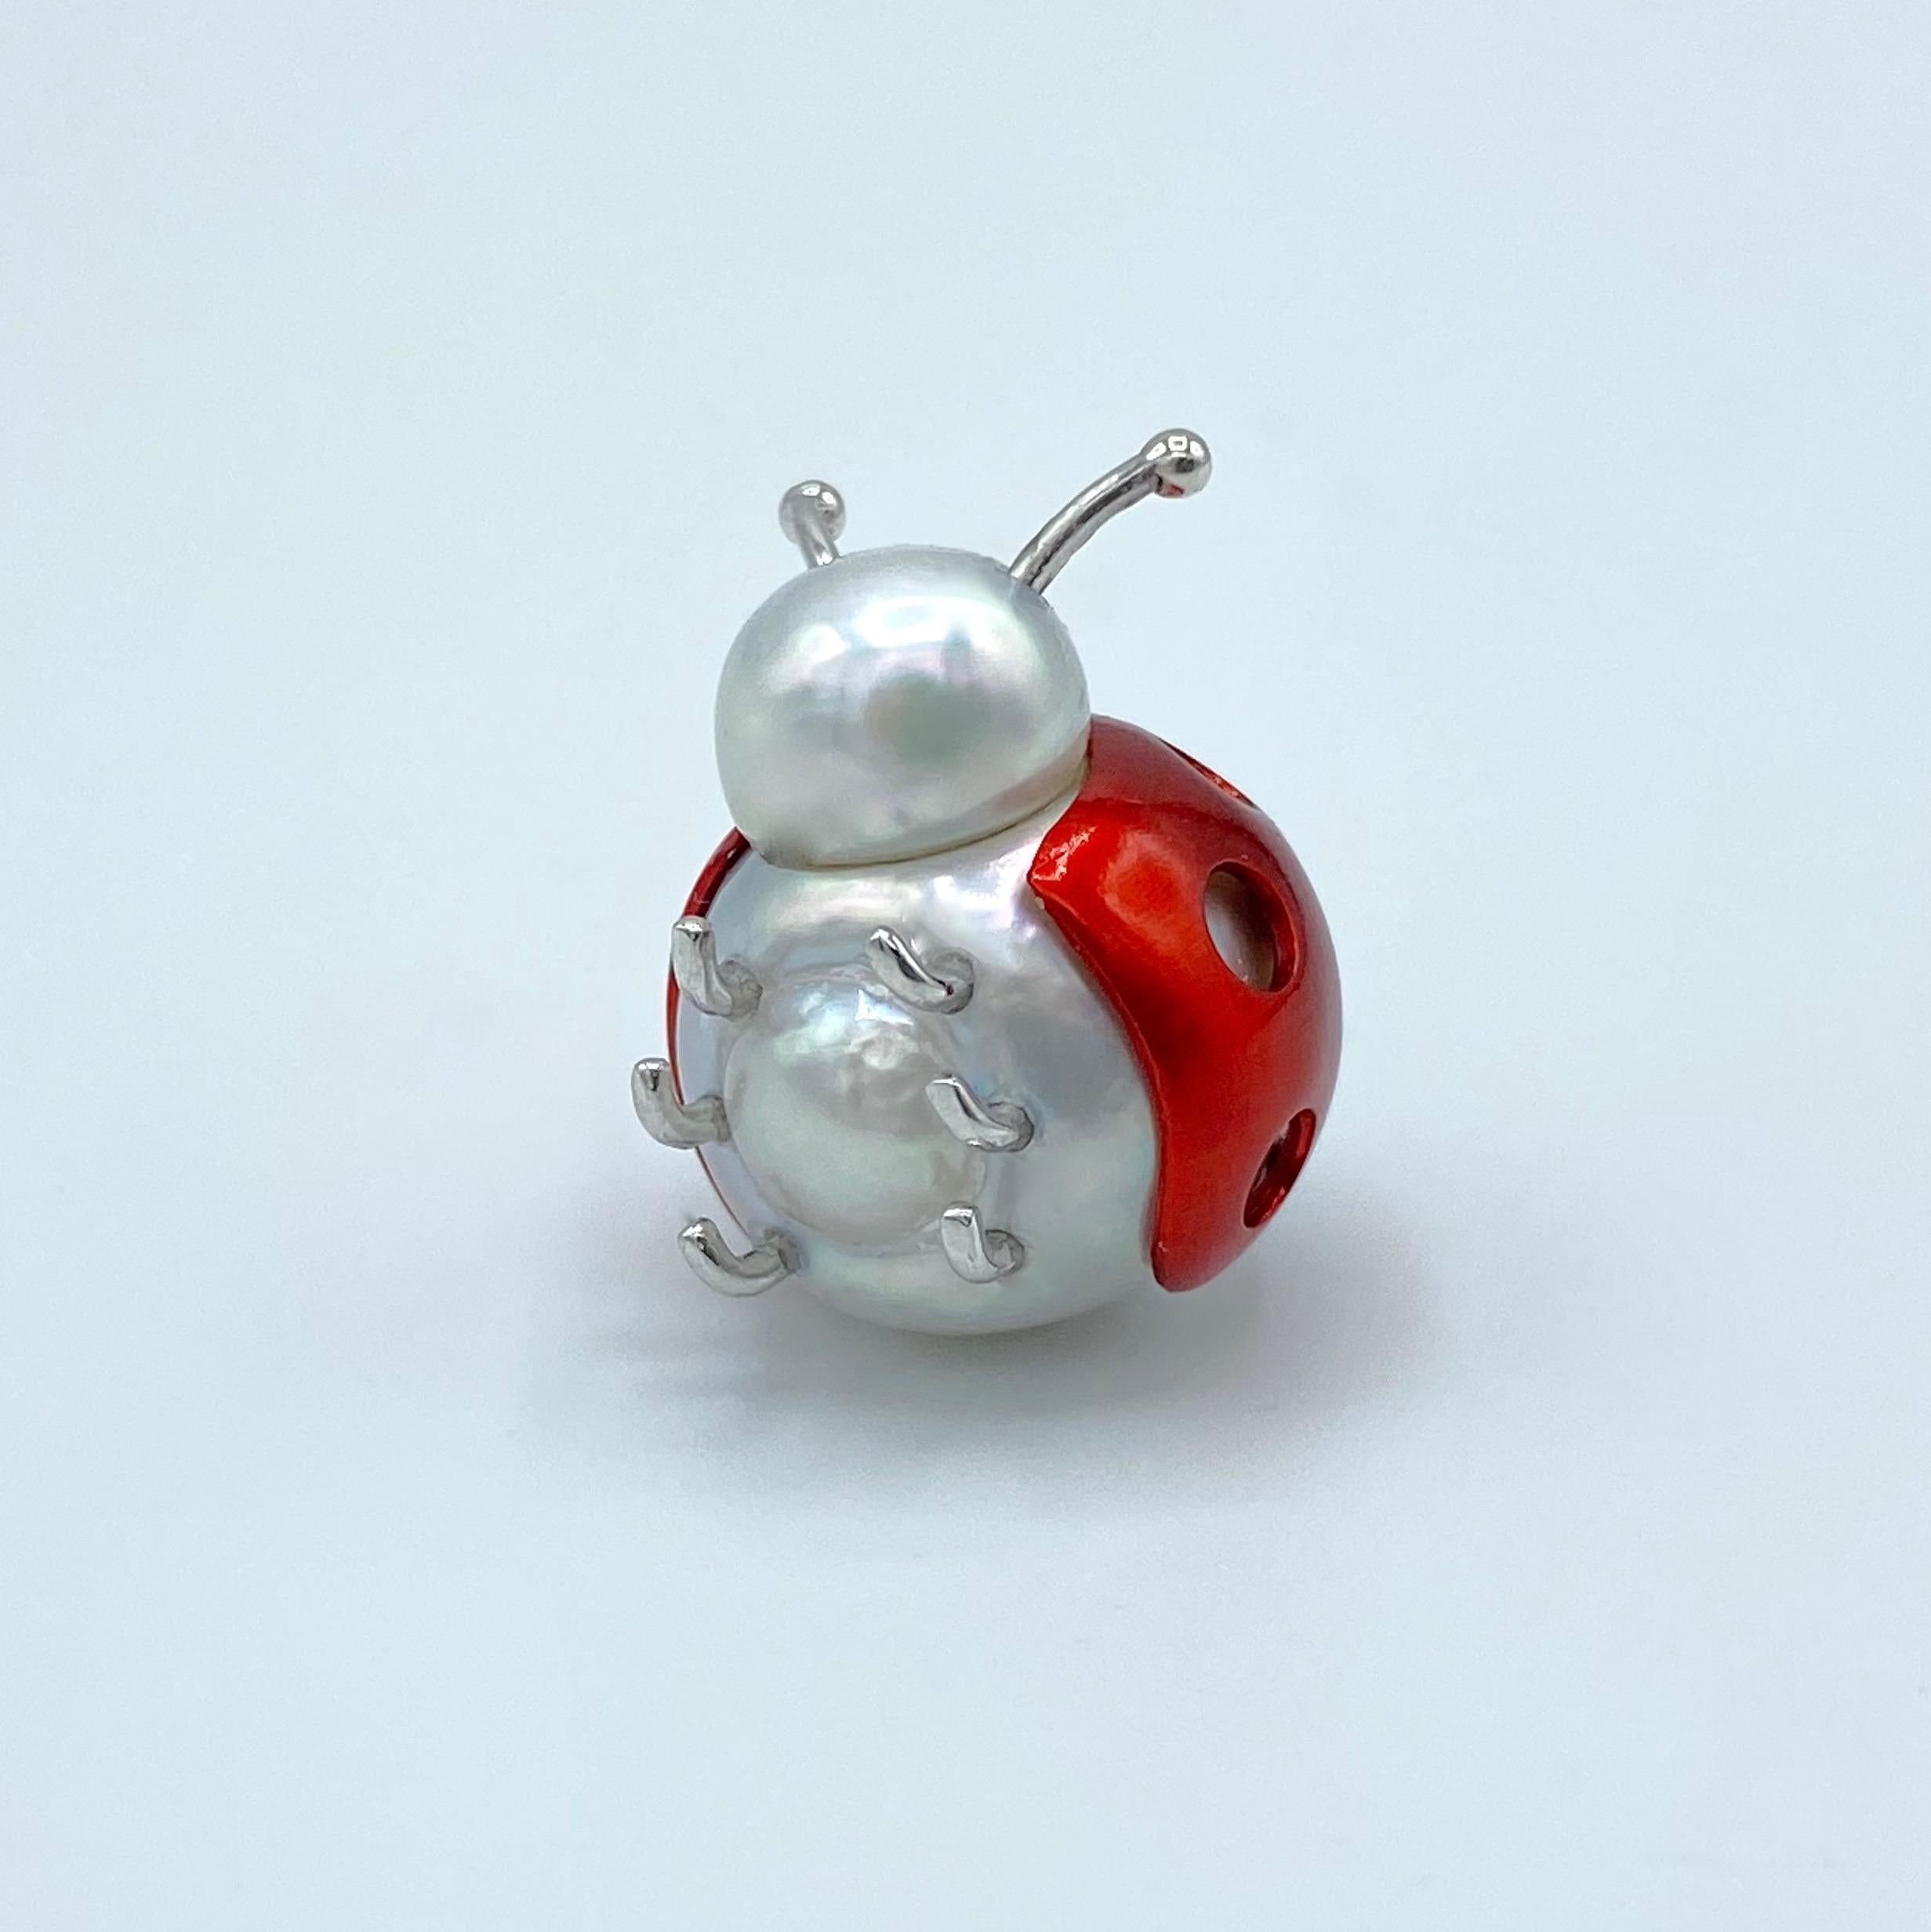 Ladybug or Ladybird 18 Karat Gold Australian Pearl Pendant Necklace or Charm 1